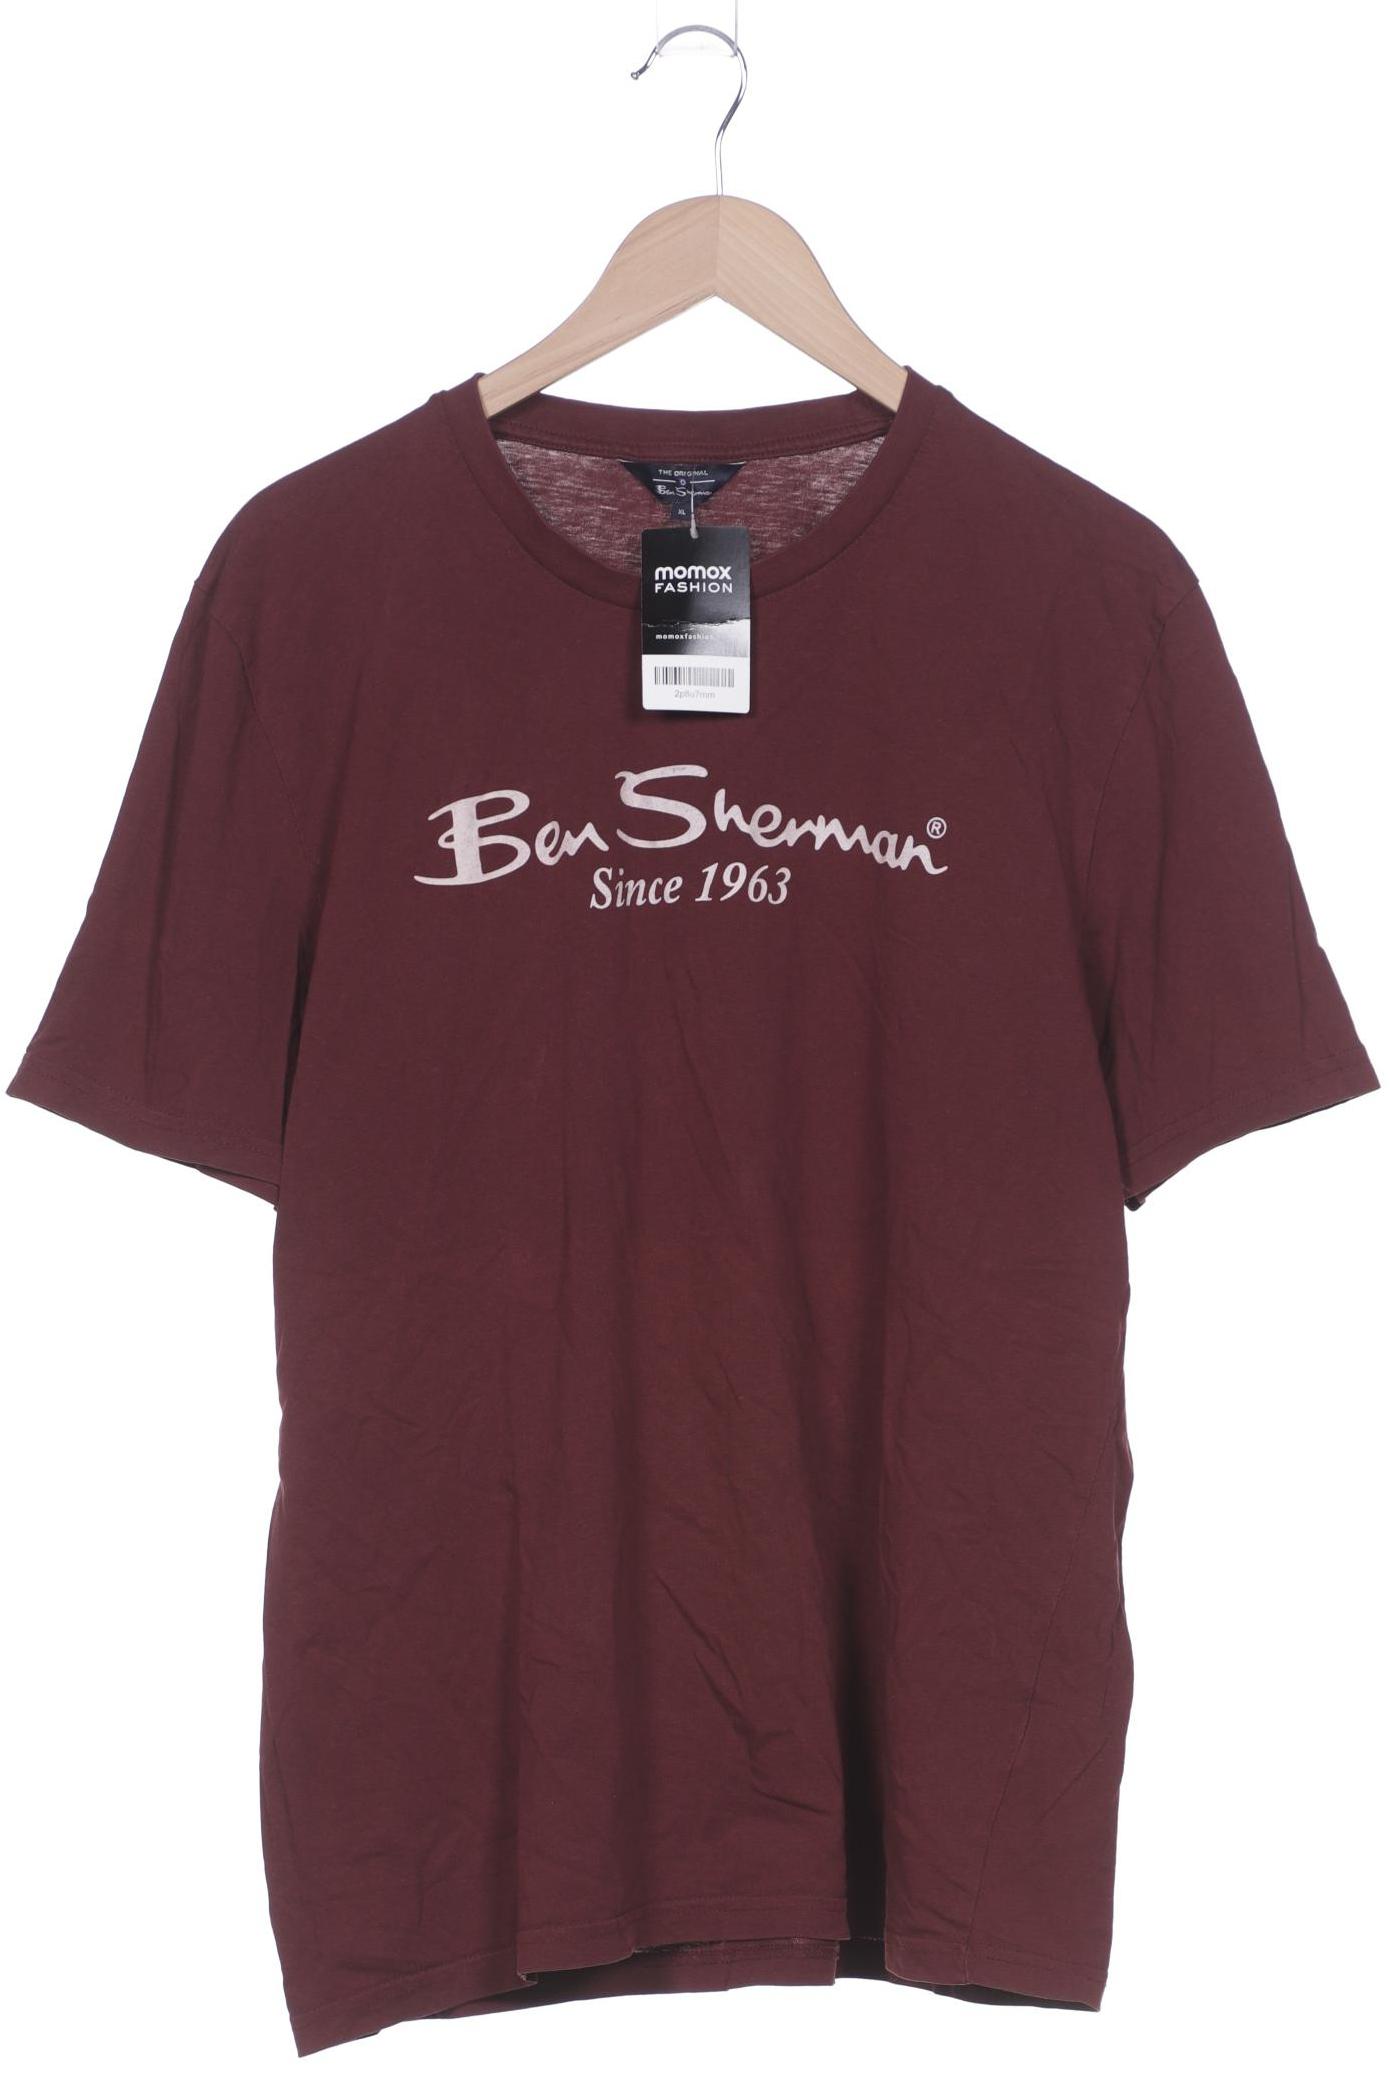 Ben Sherman Herren T-Shirt, bordeaux, Gr. 54 von Ben Sherman